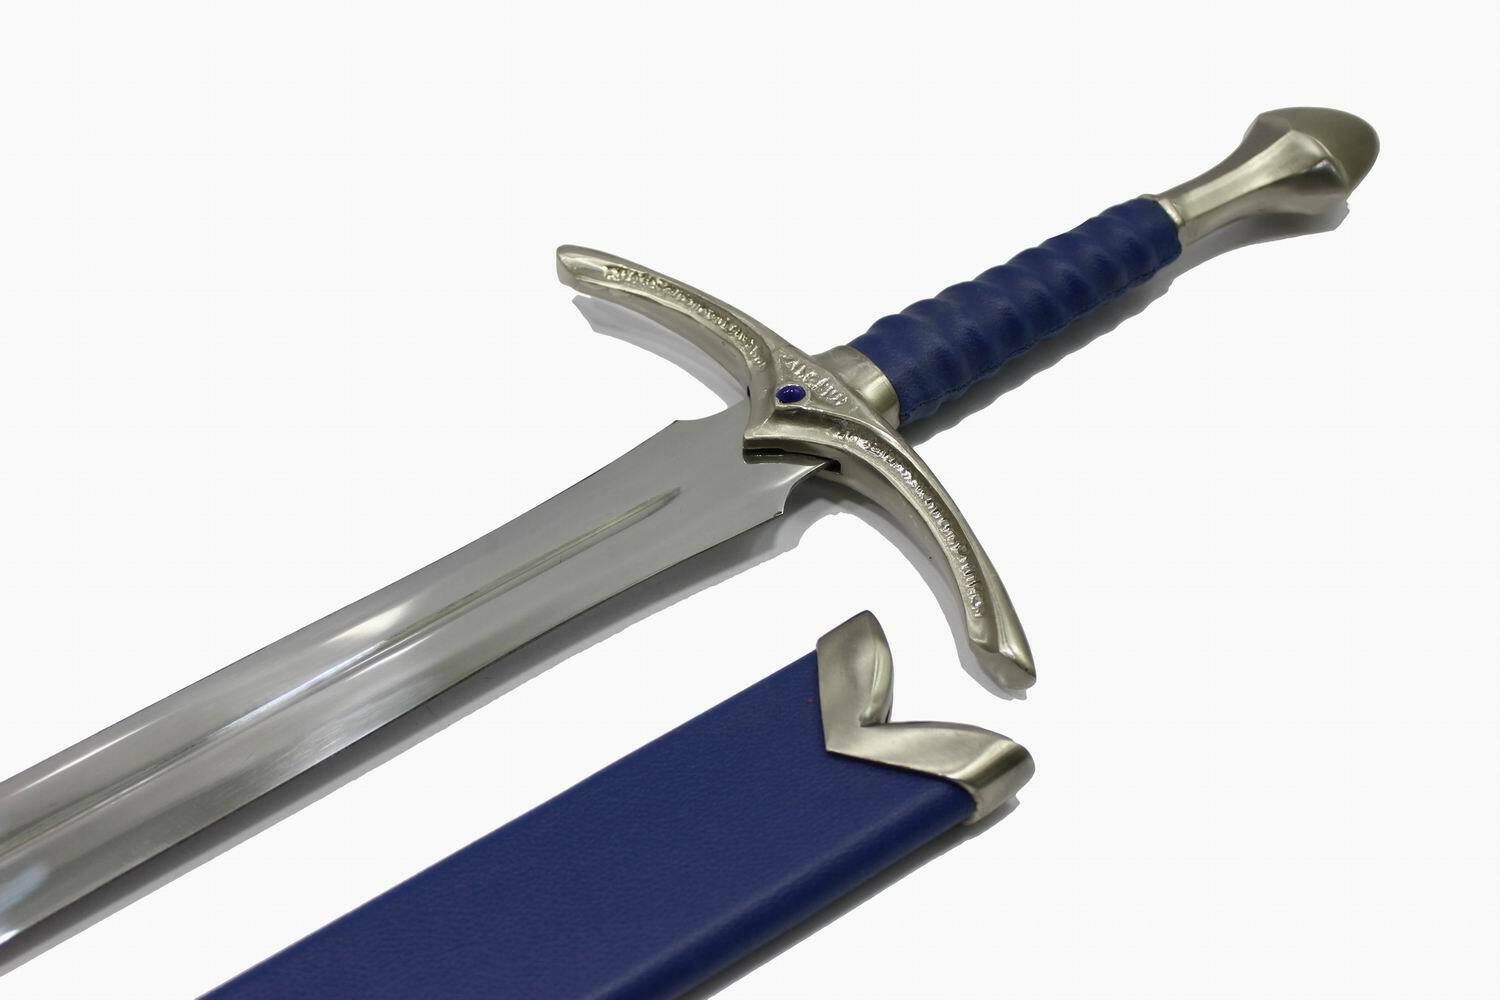 The foe hammer Gandalf's the grey glamdring sword for sale Lotr & the hobbit